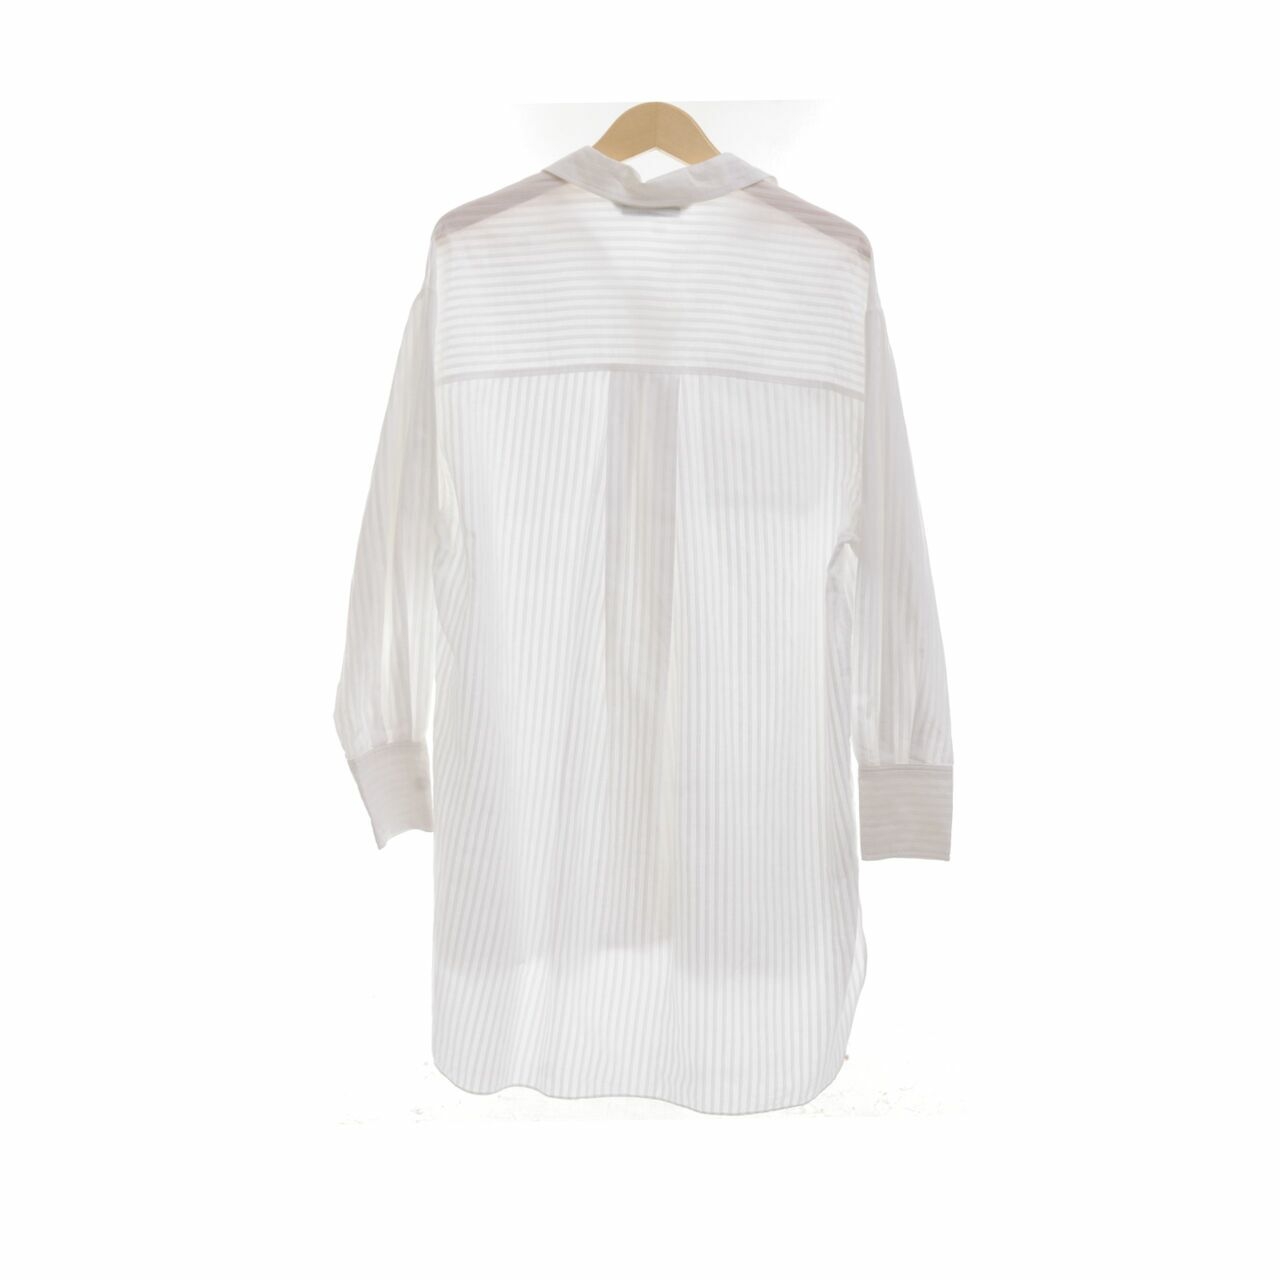 Zara White Stripes Pocket Tunic Shirt